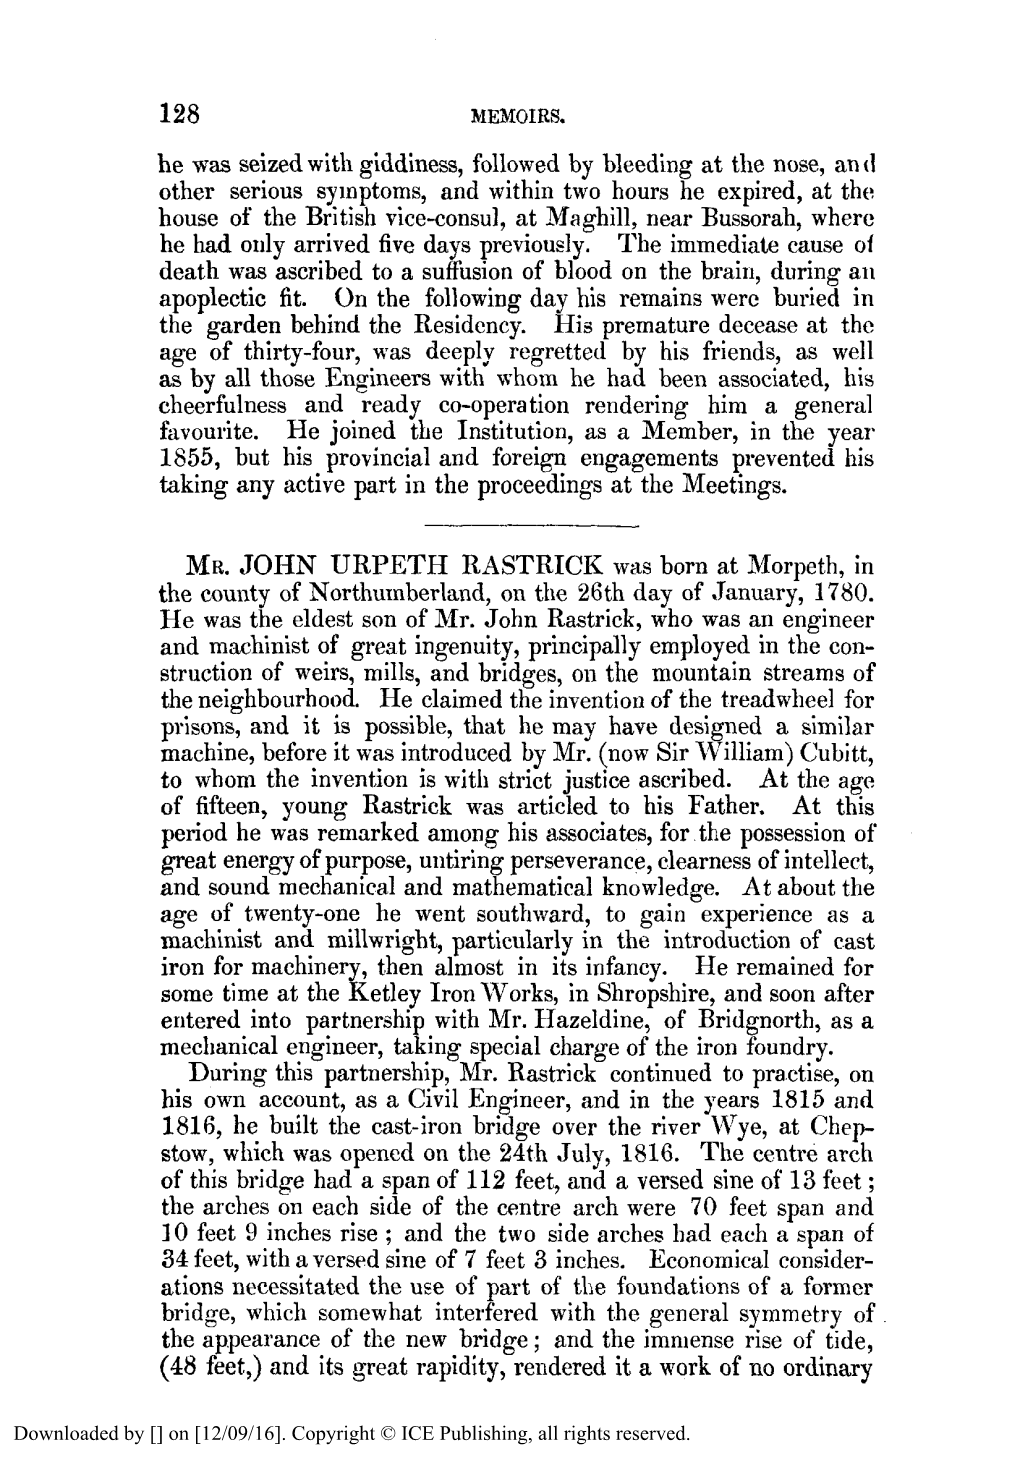 Obituary. Jphn Urpeth Rastrick, 1780-1856